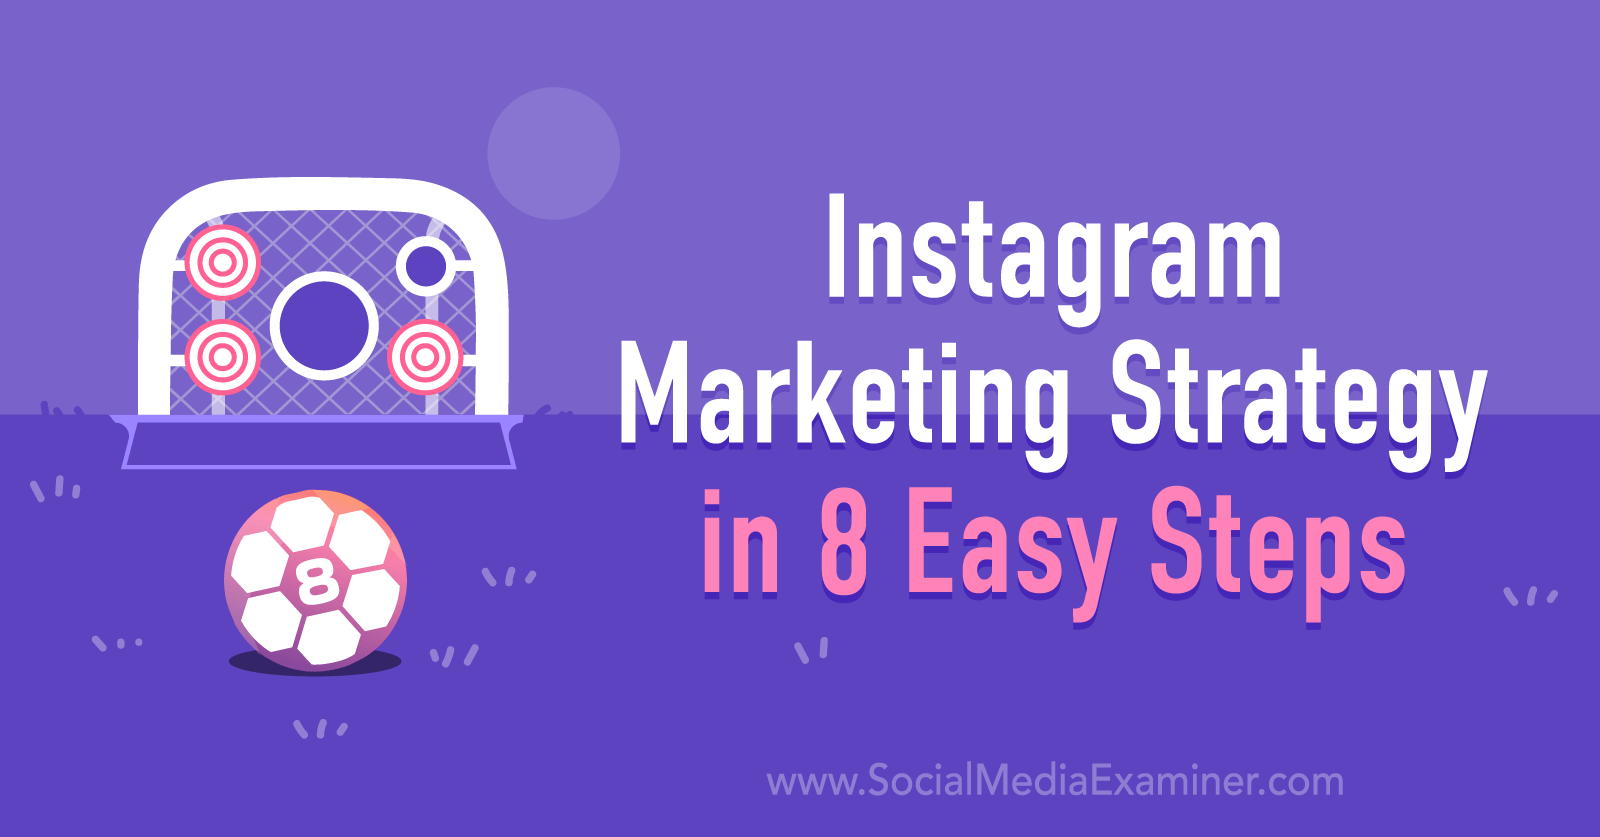 Instagram Marketing Strategy in 8 Easy Steps by Anna Sonnenberg